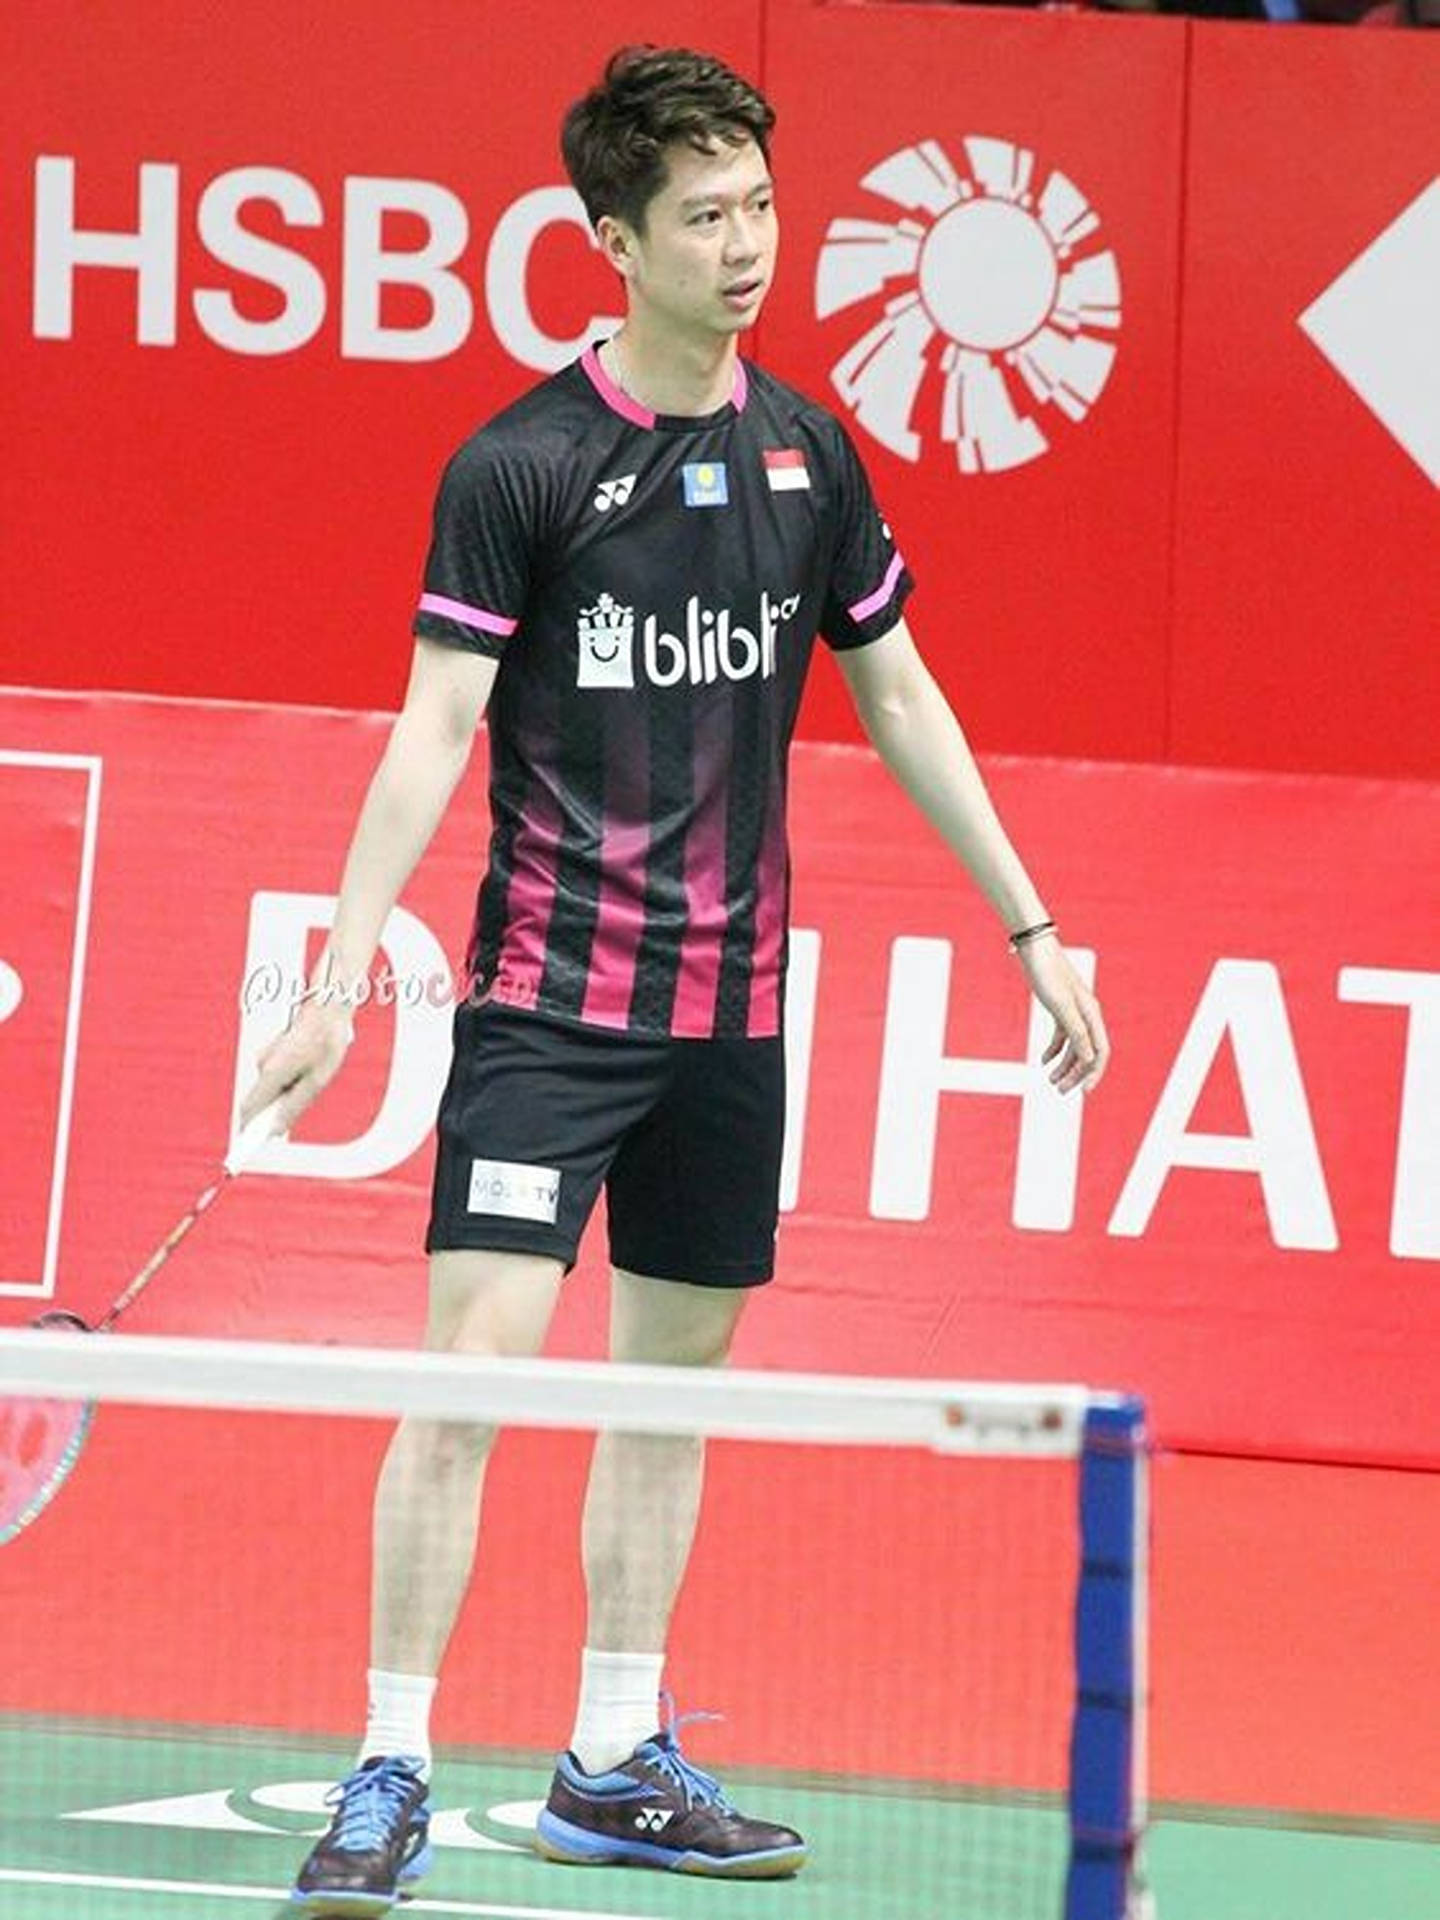 Kevin Sanjaya - Badminton Prodigy In Action Wallpaper